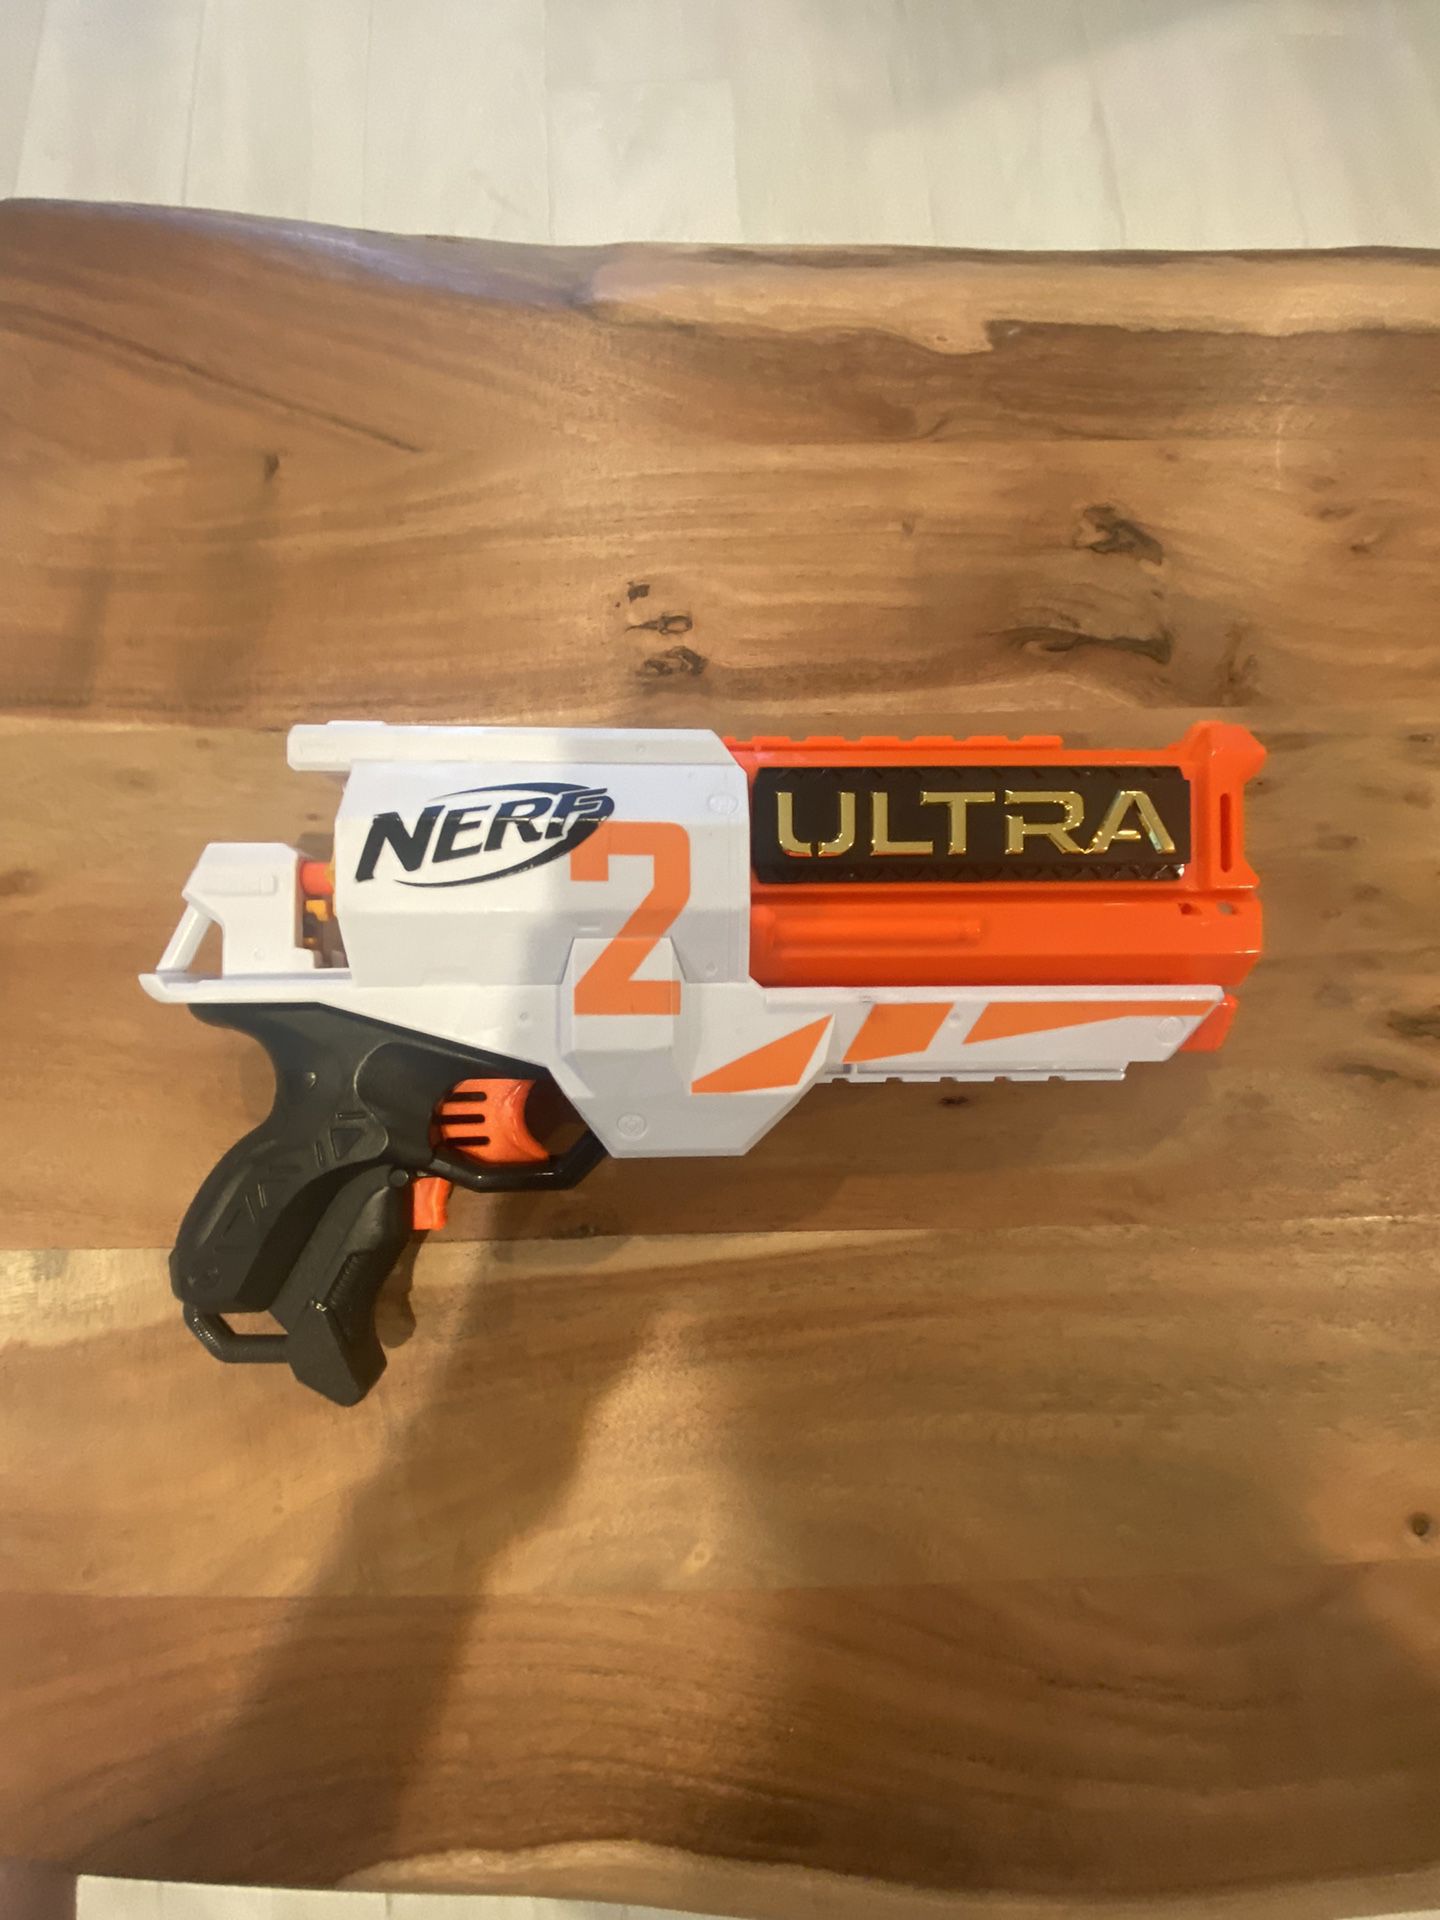 Ultra Nerf Guns $40